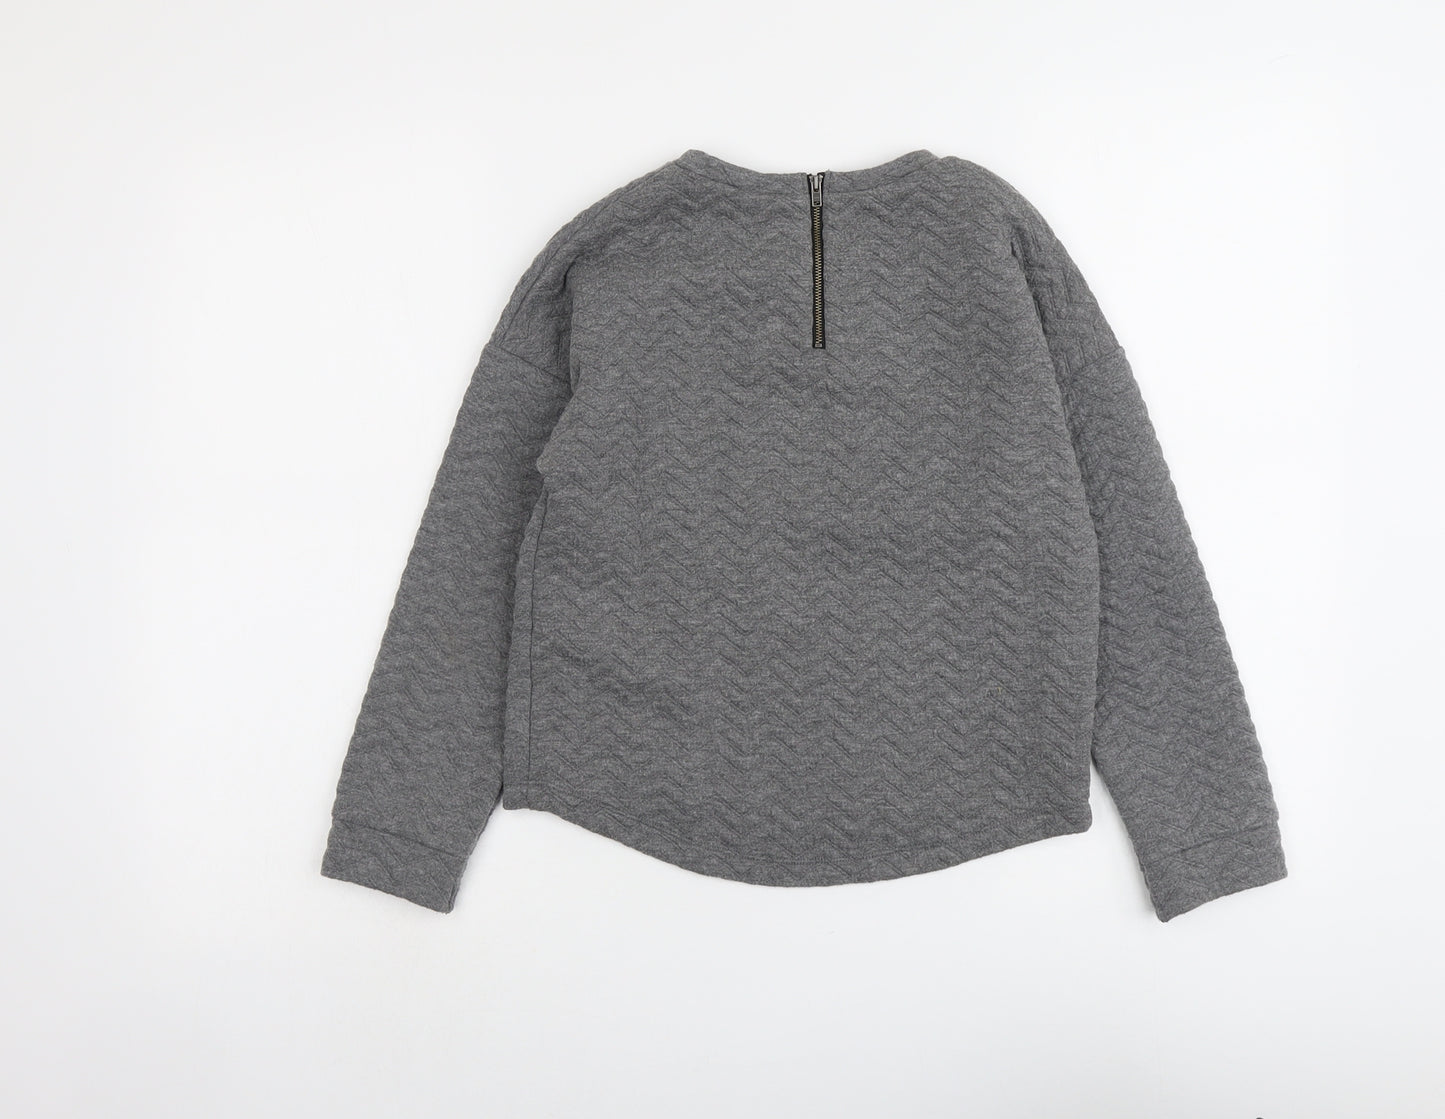 NEXT Girls Grey Polyester Pullover Sweatshirt Size 10 Years Pullover - Textured